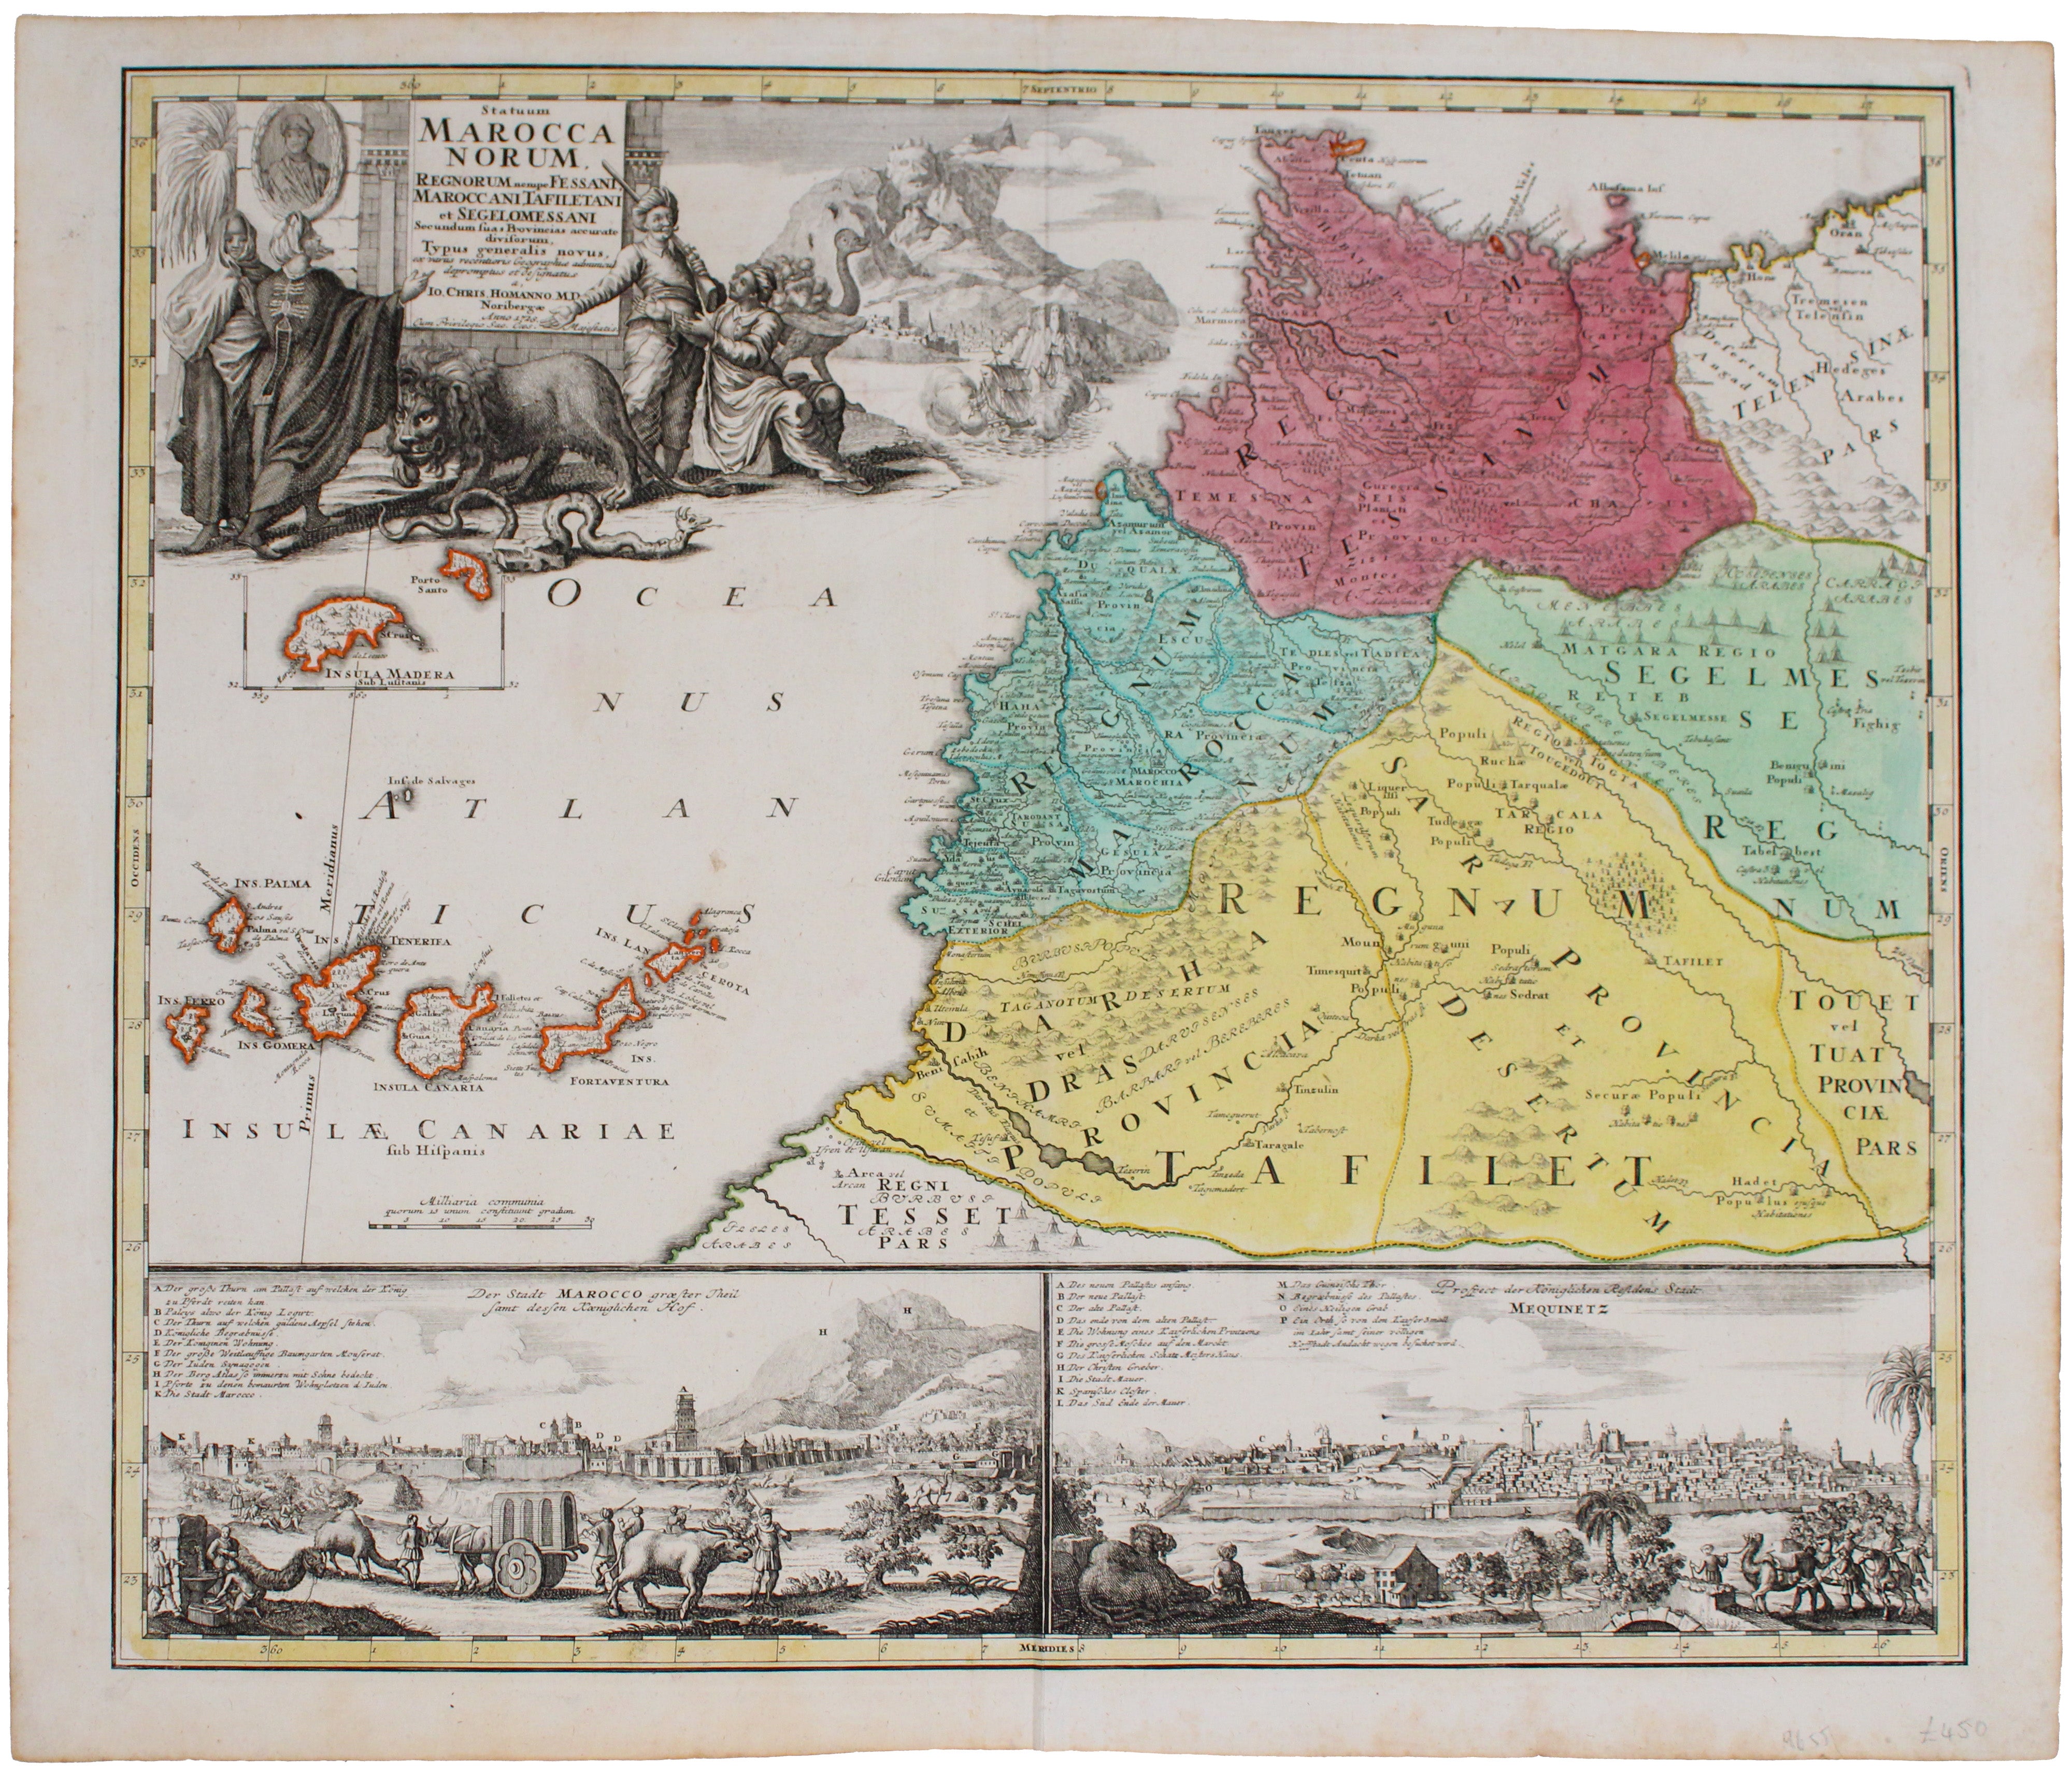 Homann's Map of Morocco